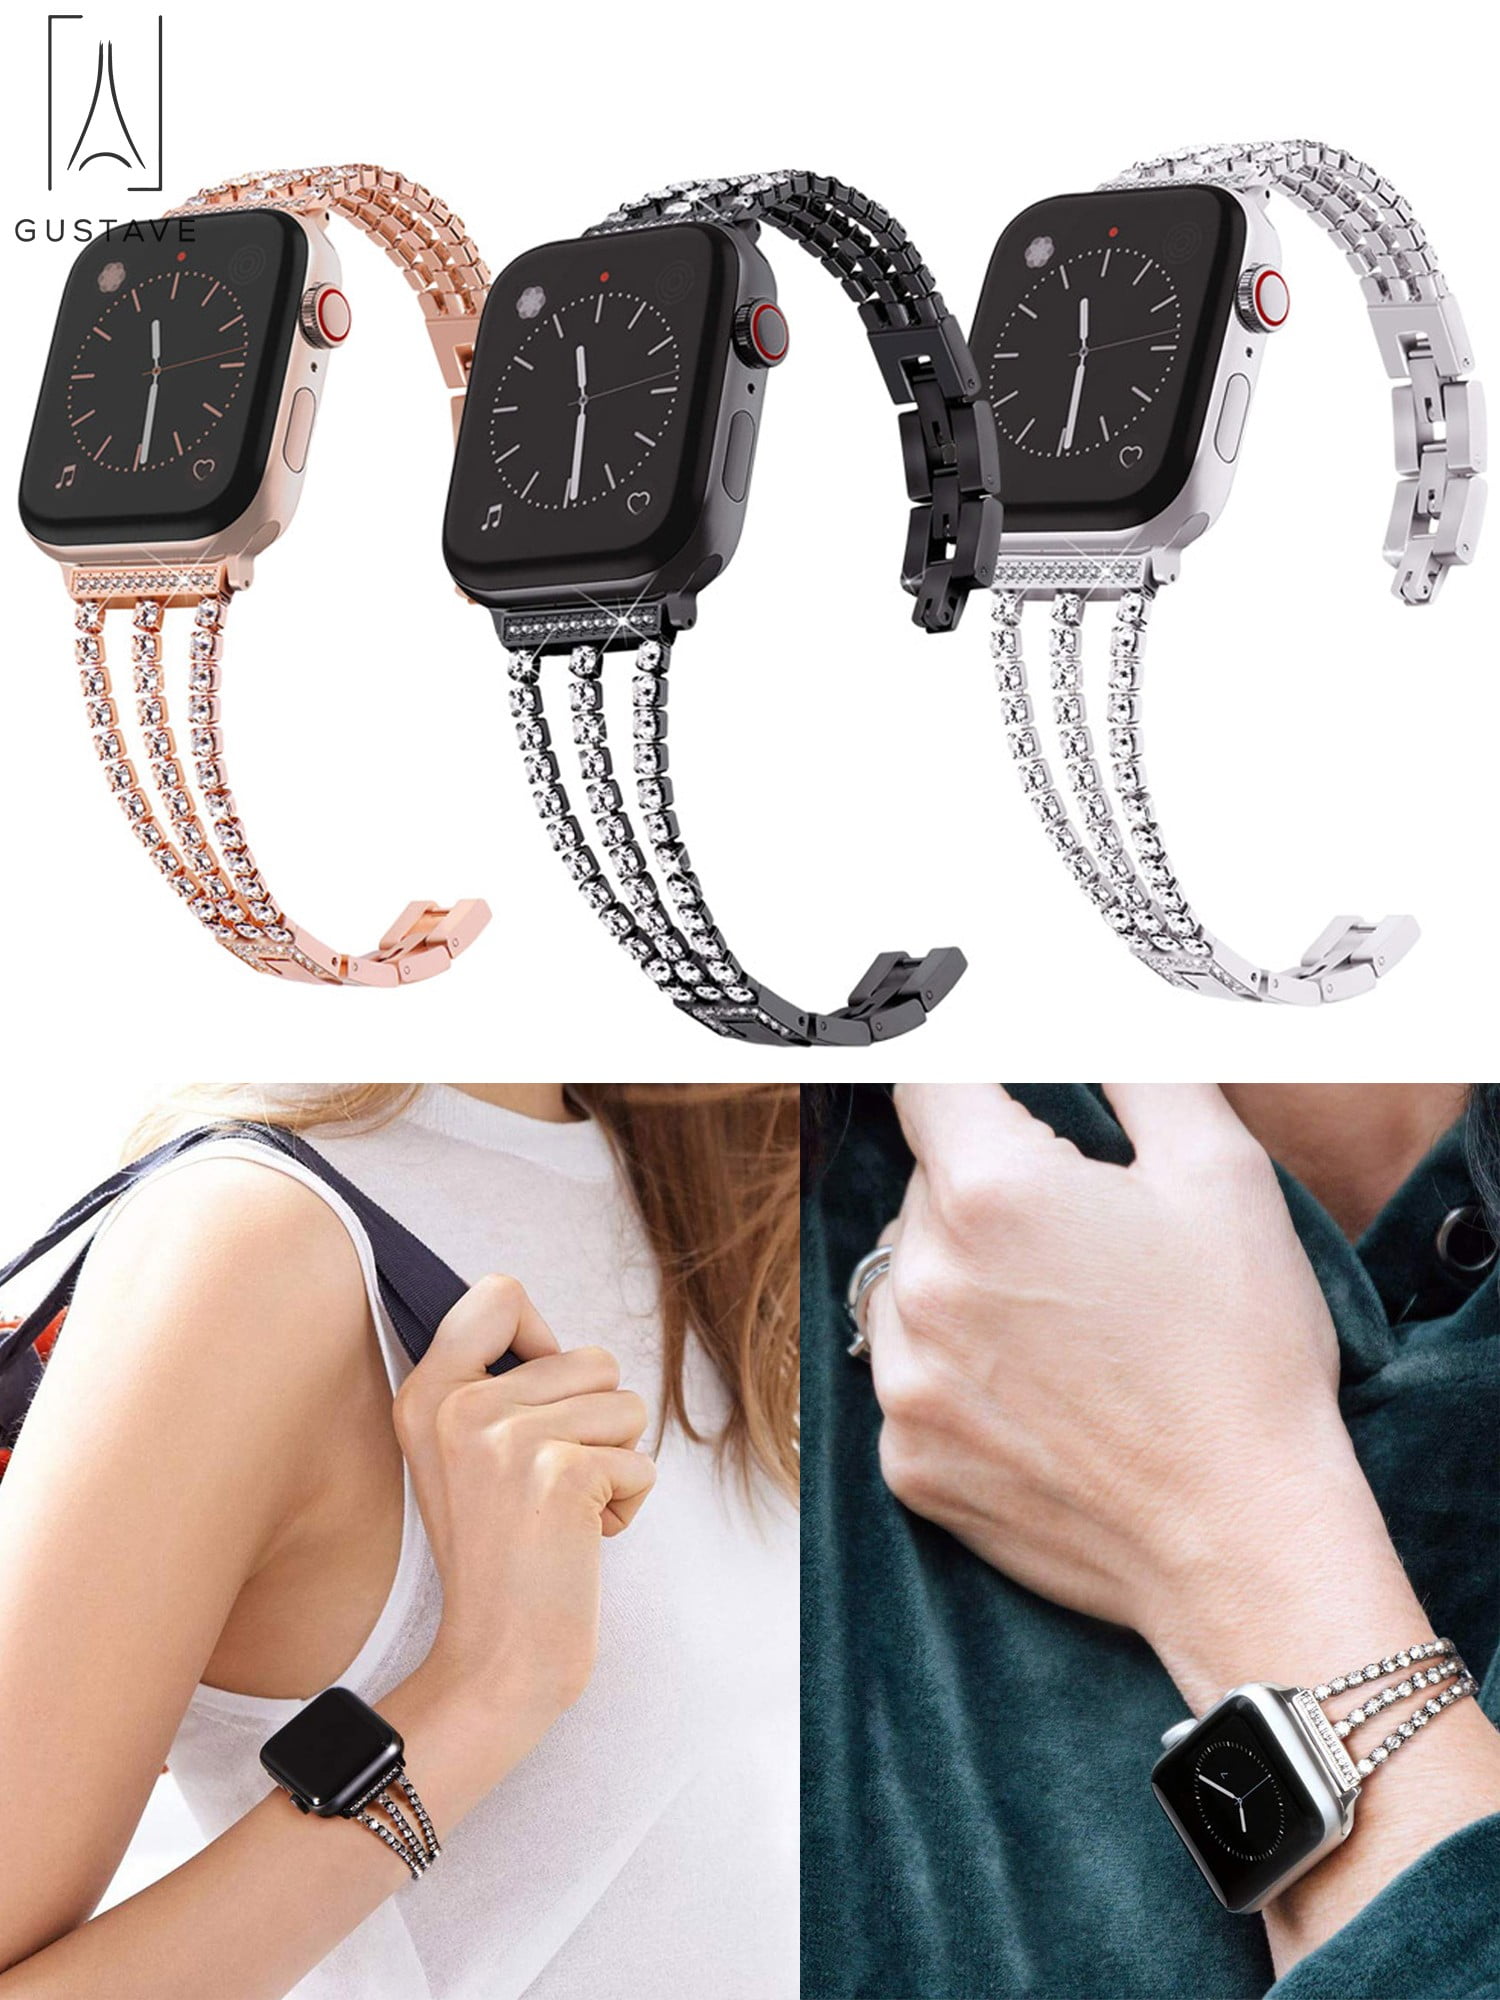 trechter Knipoog Eerlijk Gustave Apple Watch Bands Women Bracelet Replacement for iWatch Bands  Stainless Steel Metal with Rhinestone Diamond for Series 7,6,5,4,3,2,1  "Black,38mm / 40mm" - Walmart.com